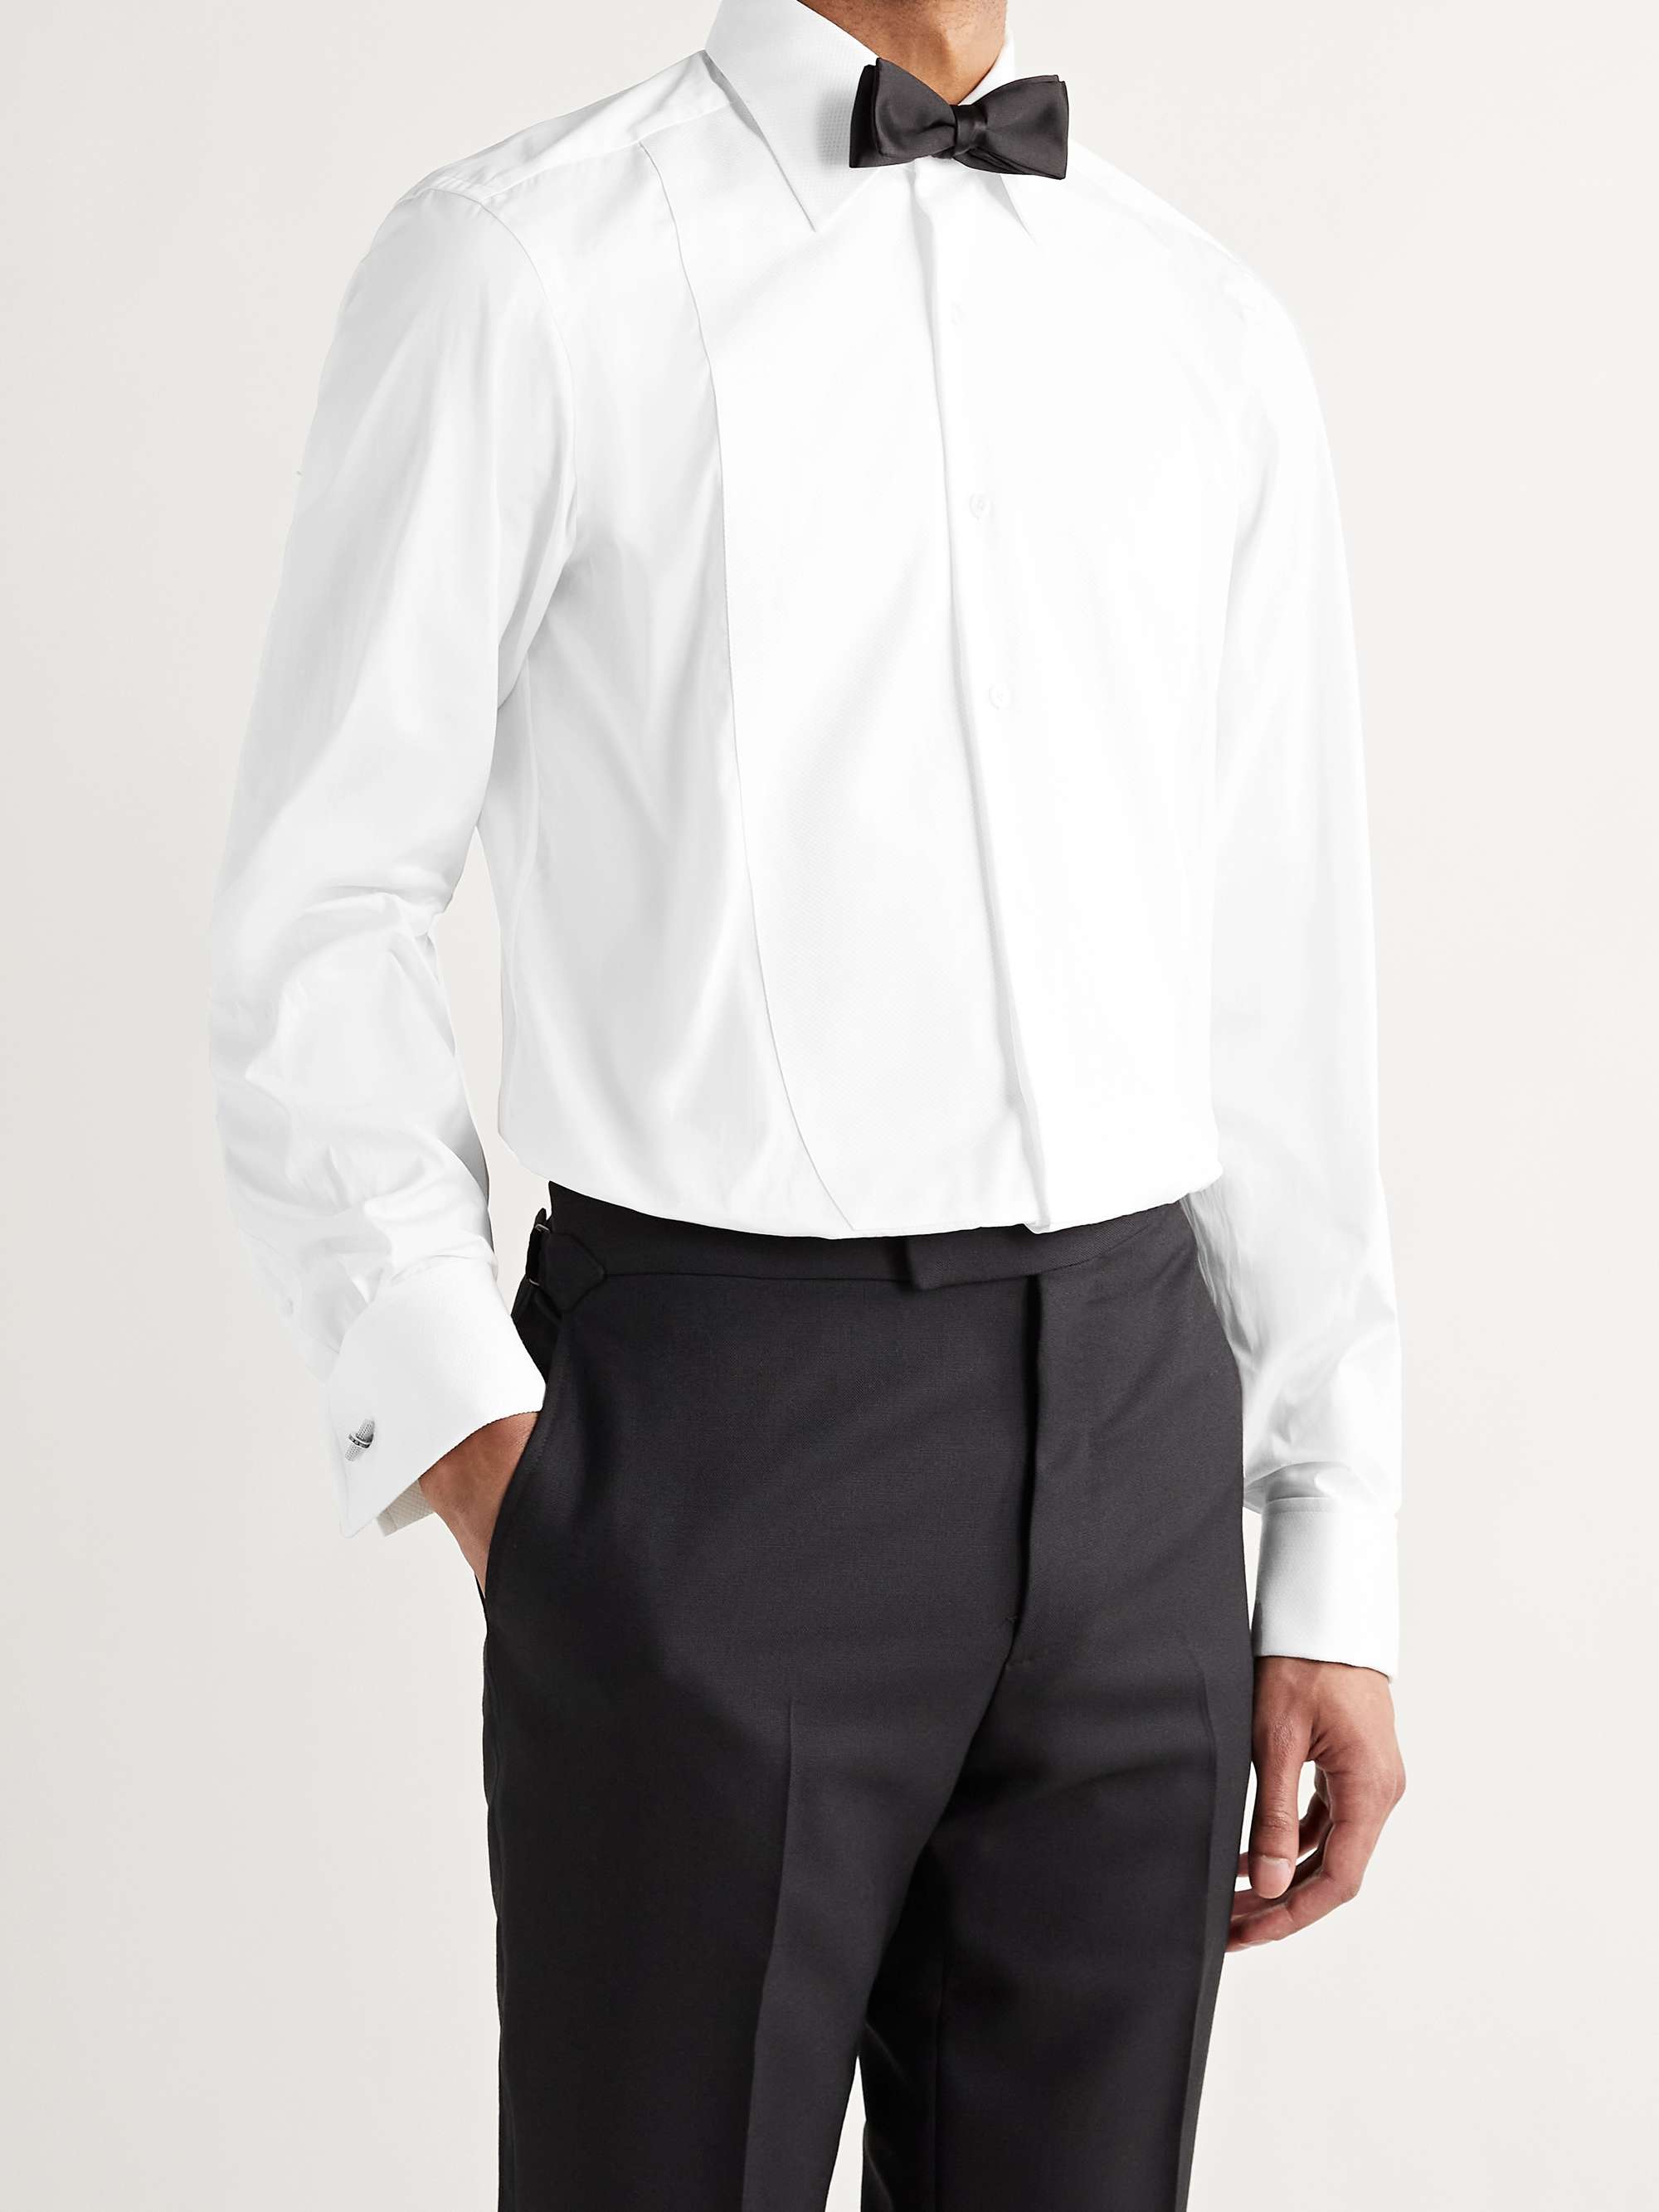 TOM FORD White Slim-Fit Bib-Front Double-Cuff Cotton Tuxedo Shirt